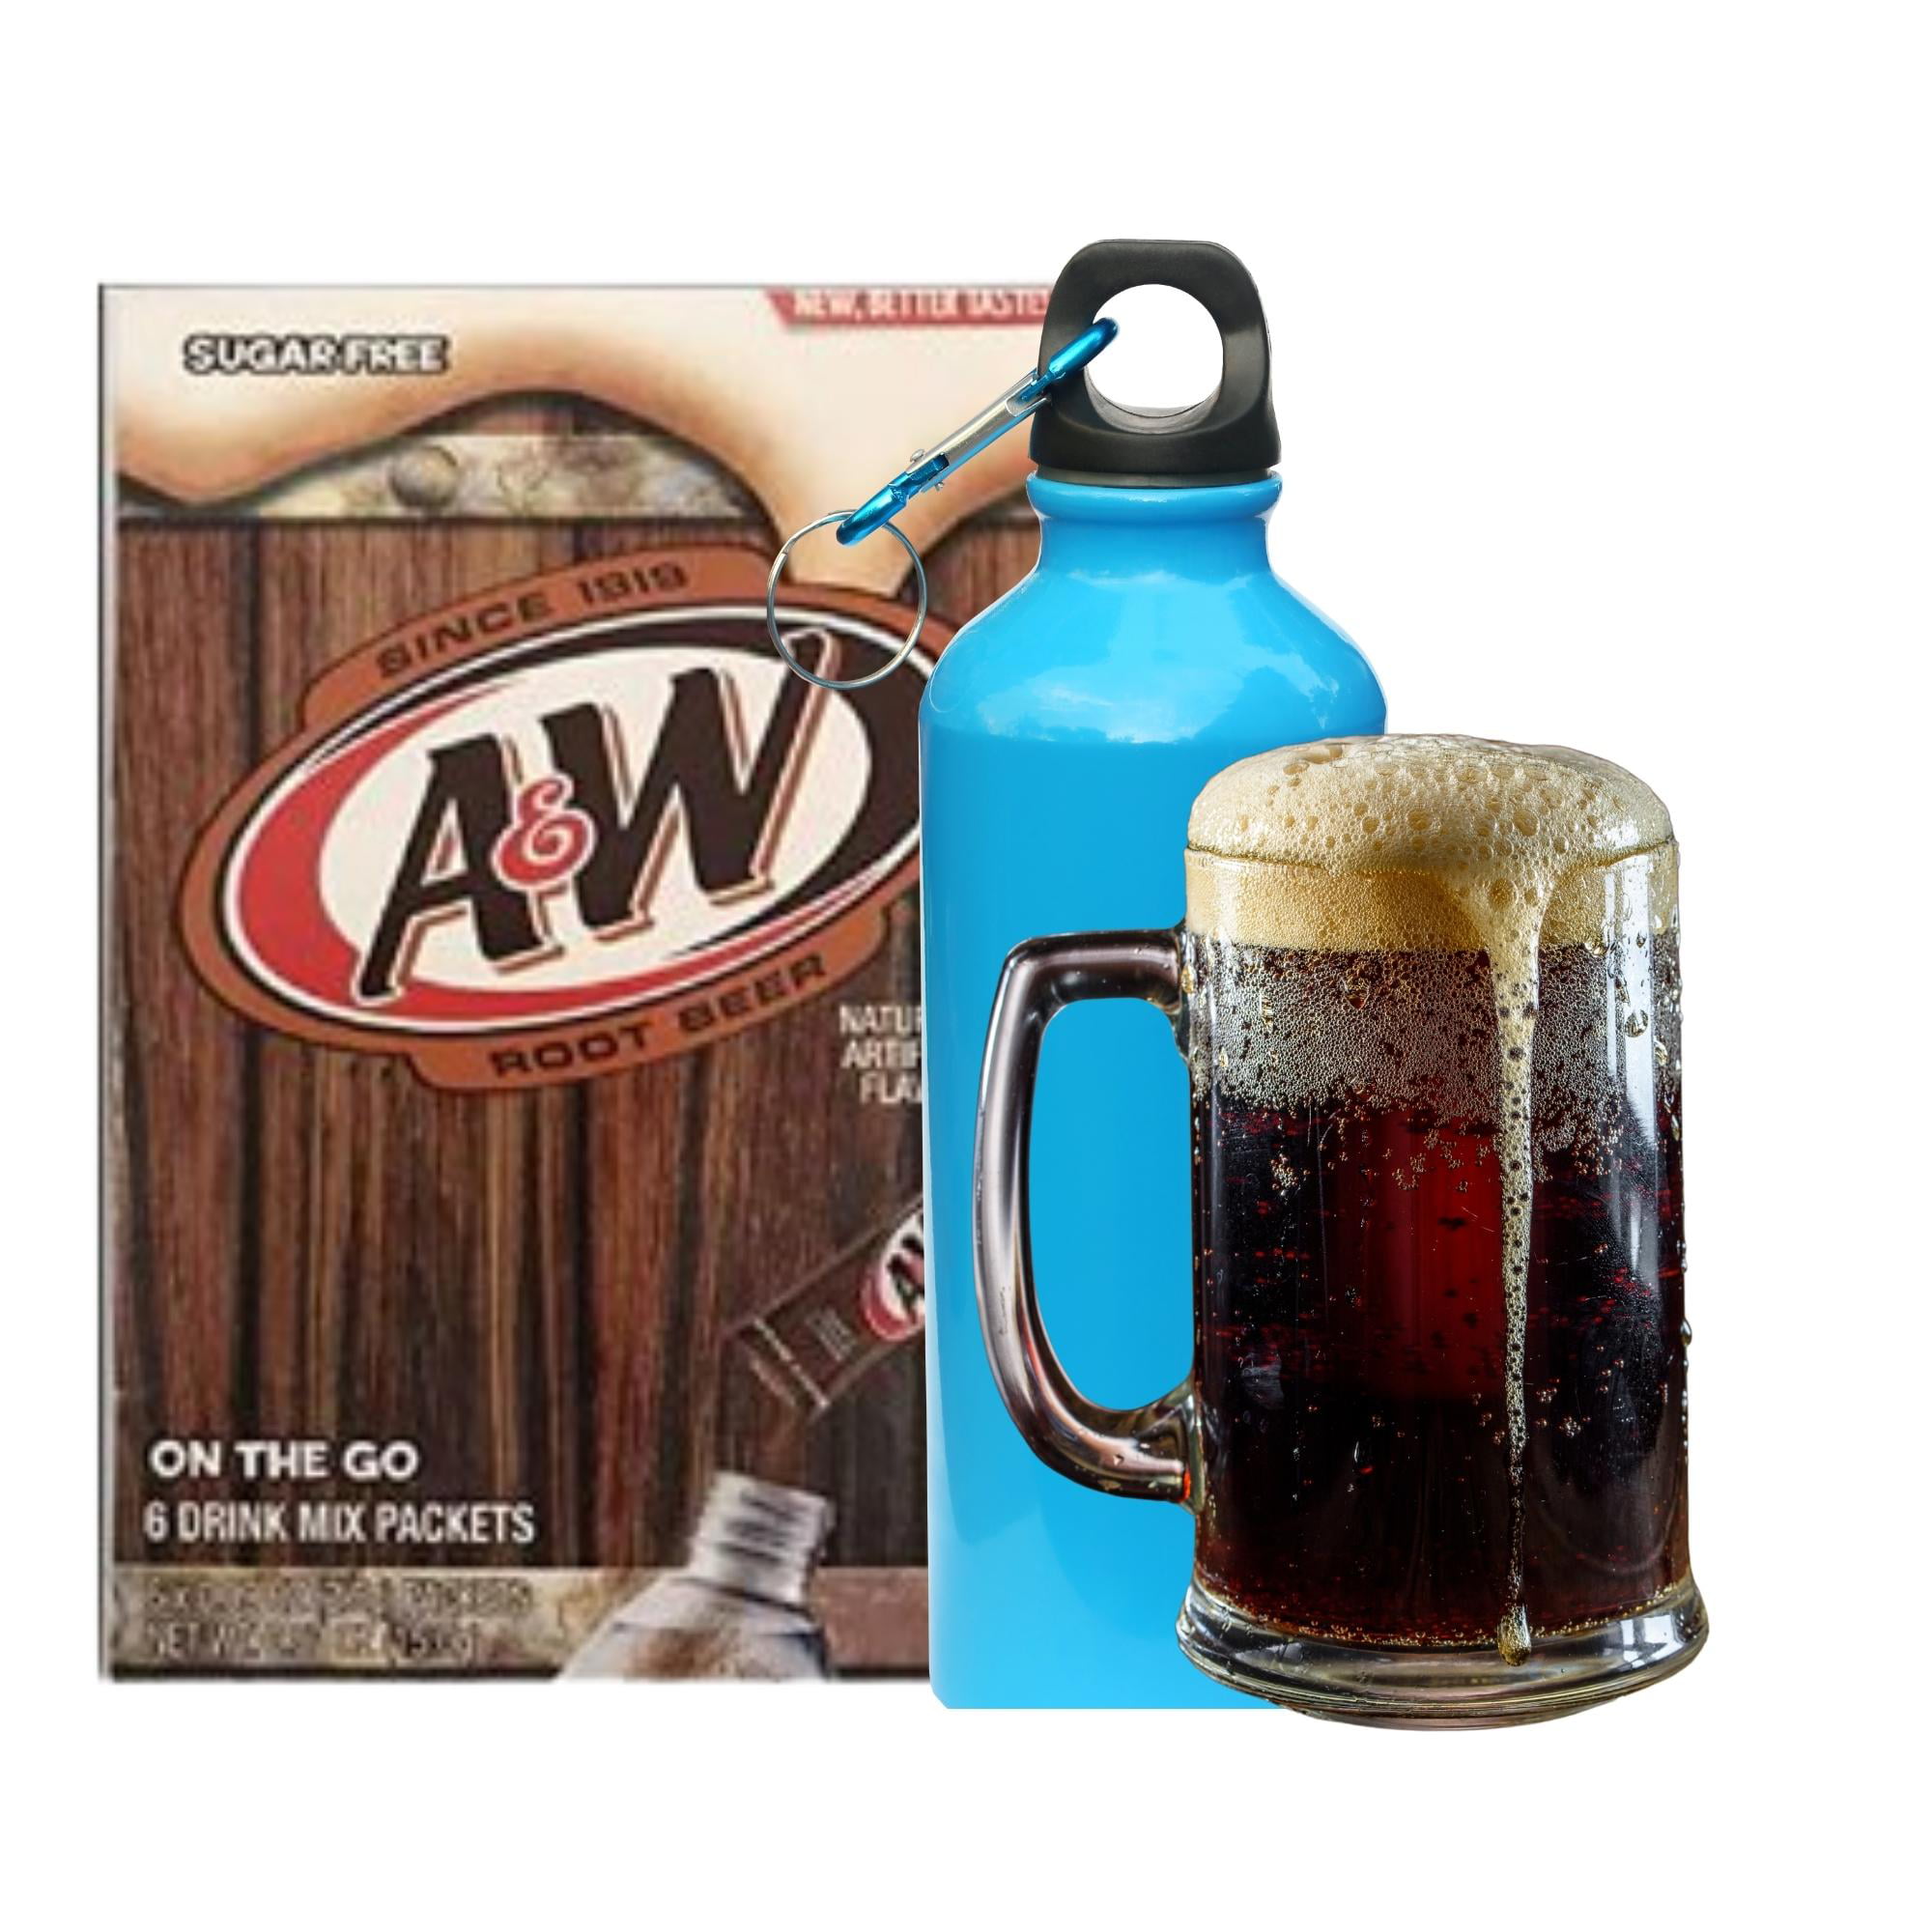 Save on Mug Root Beer Soda Caffeine Free - 6 pk Order Online Delivery